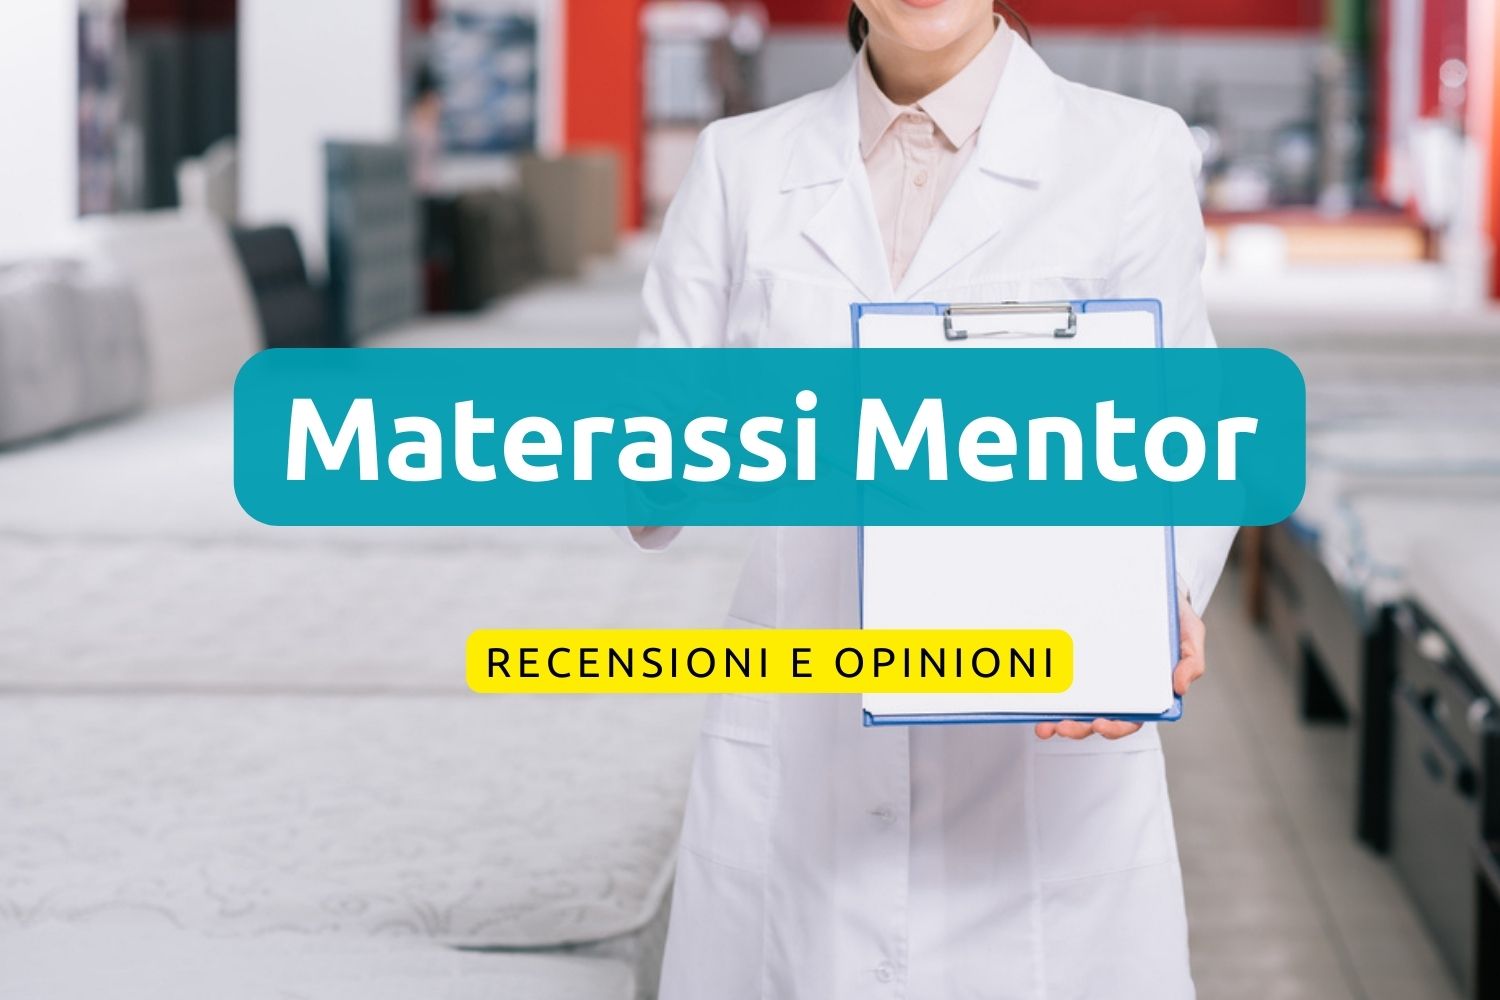 Materassi mentor